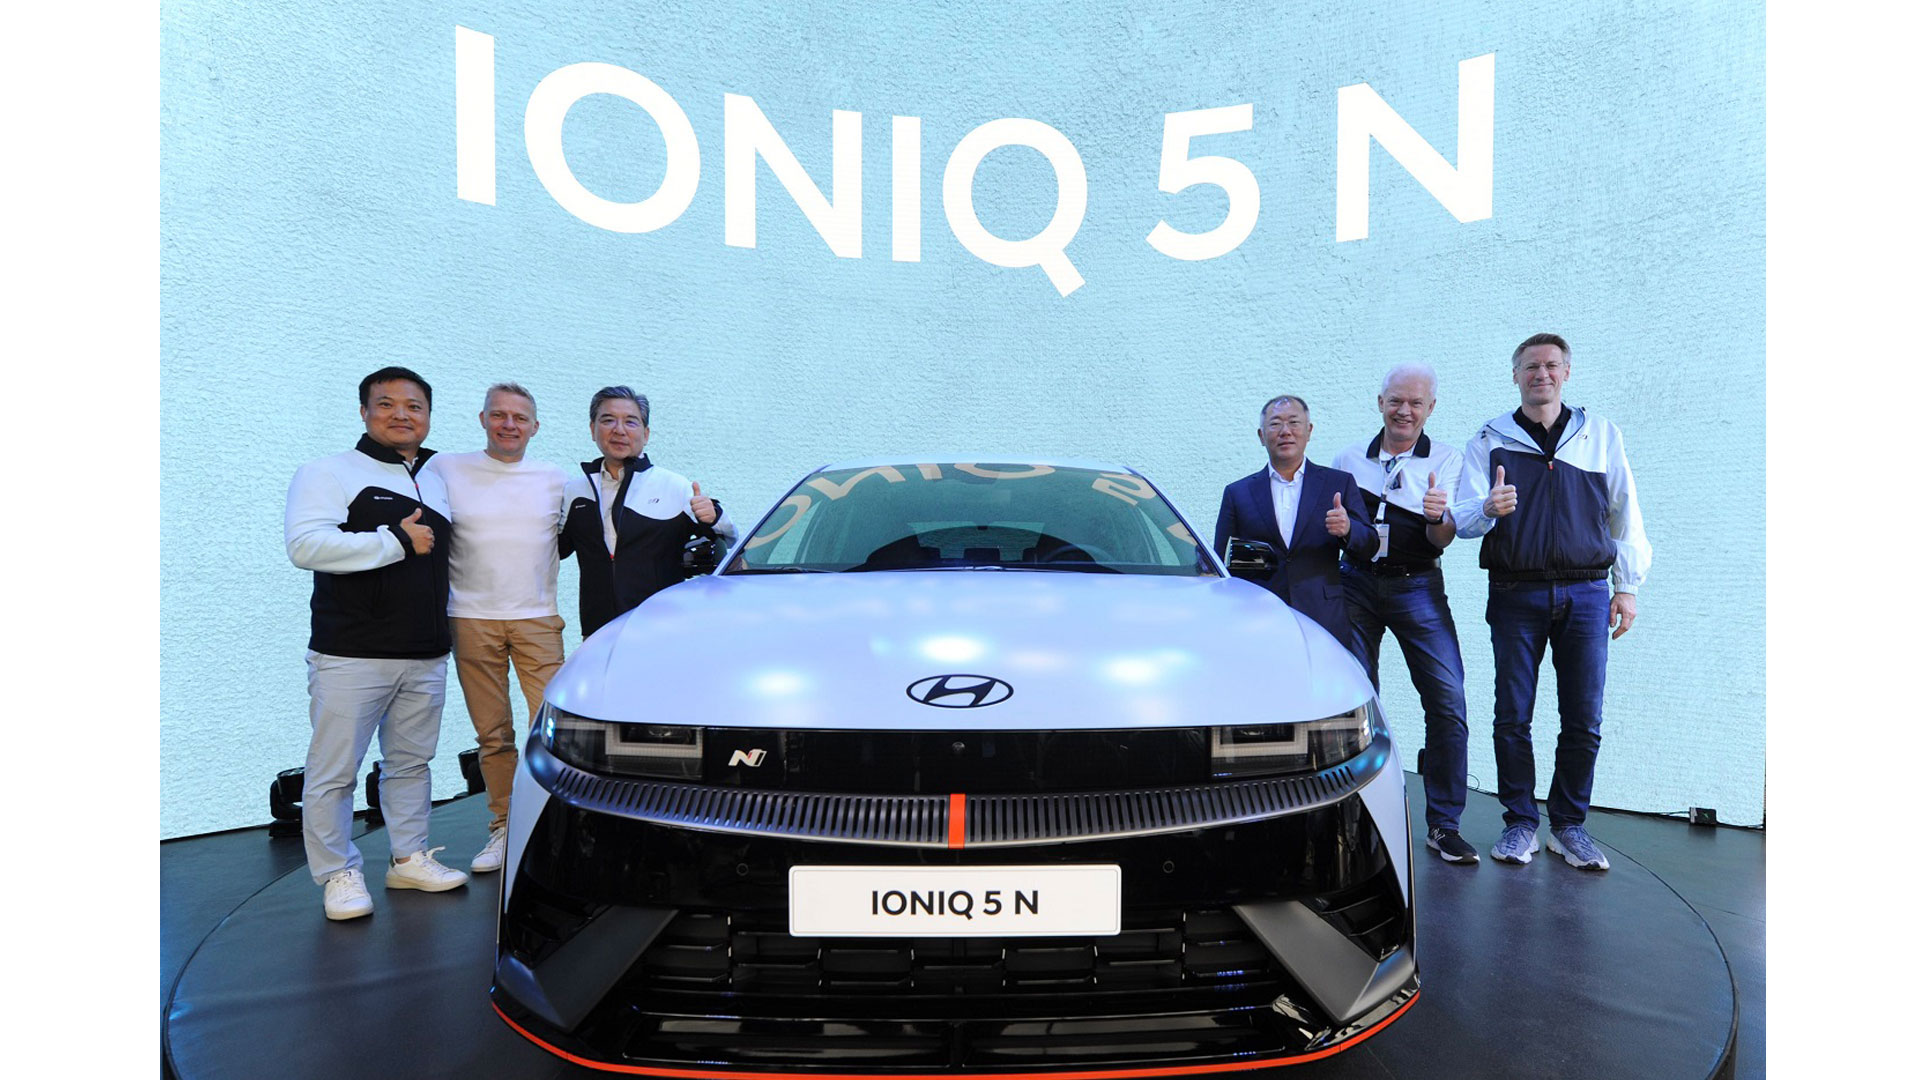 IONIQ 5 N de Hyundai debuto en Goodwood